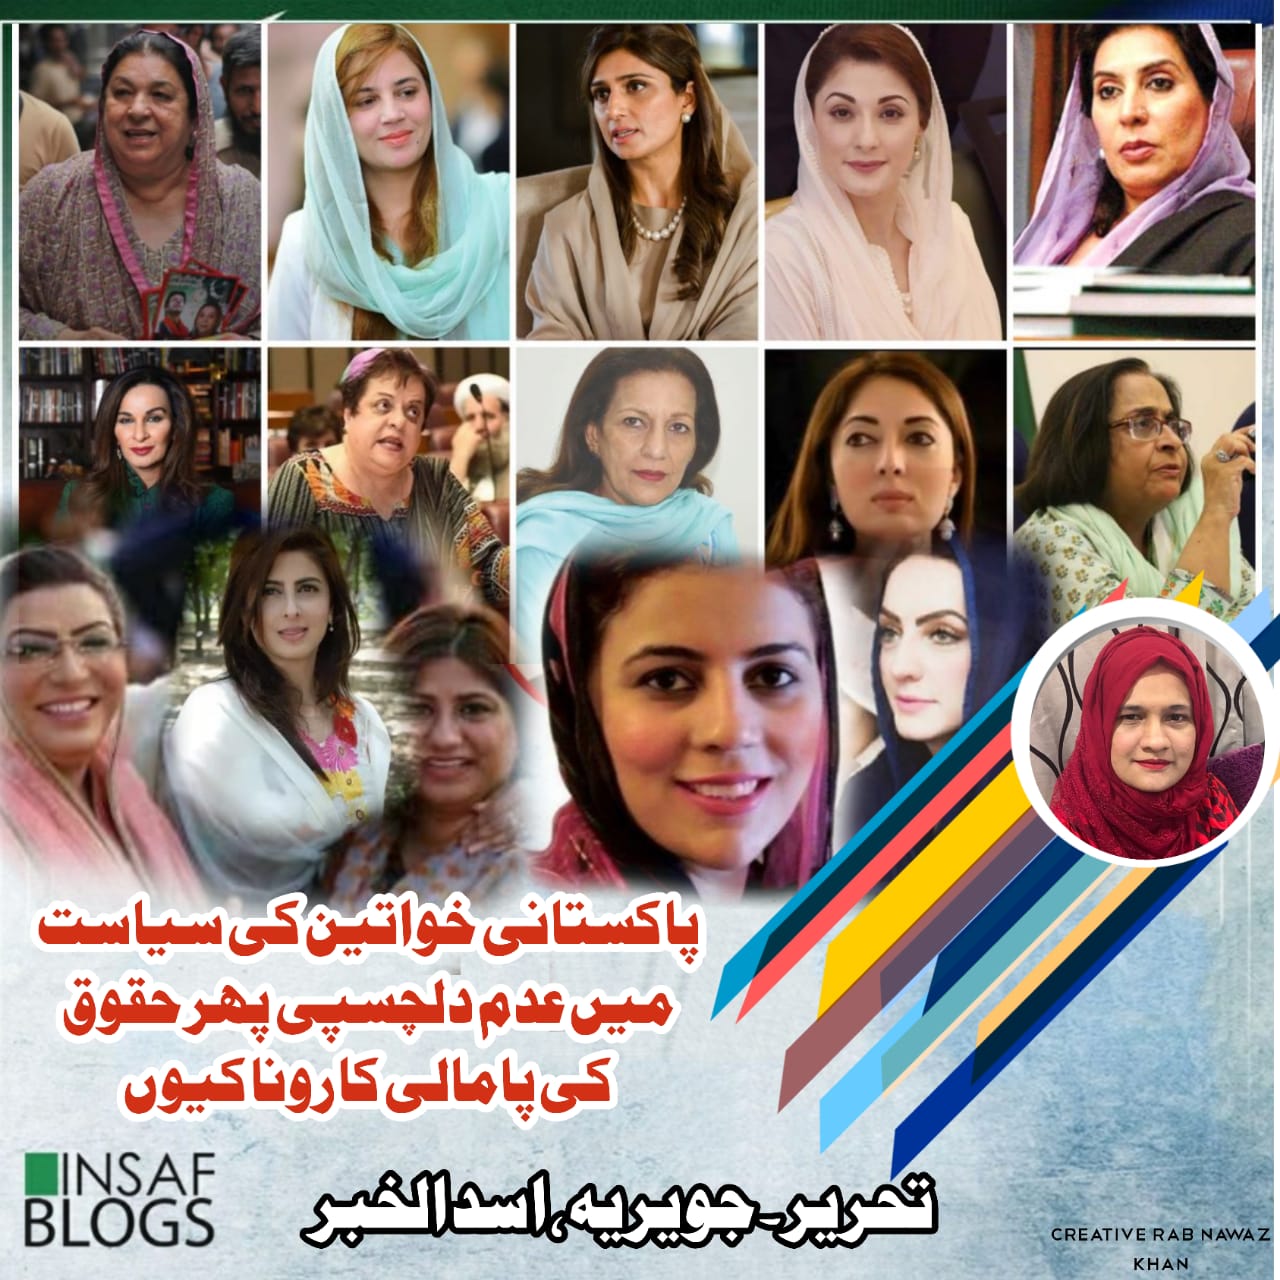 Pakistani Women's Interest In Politics - Insaf Blog